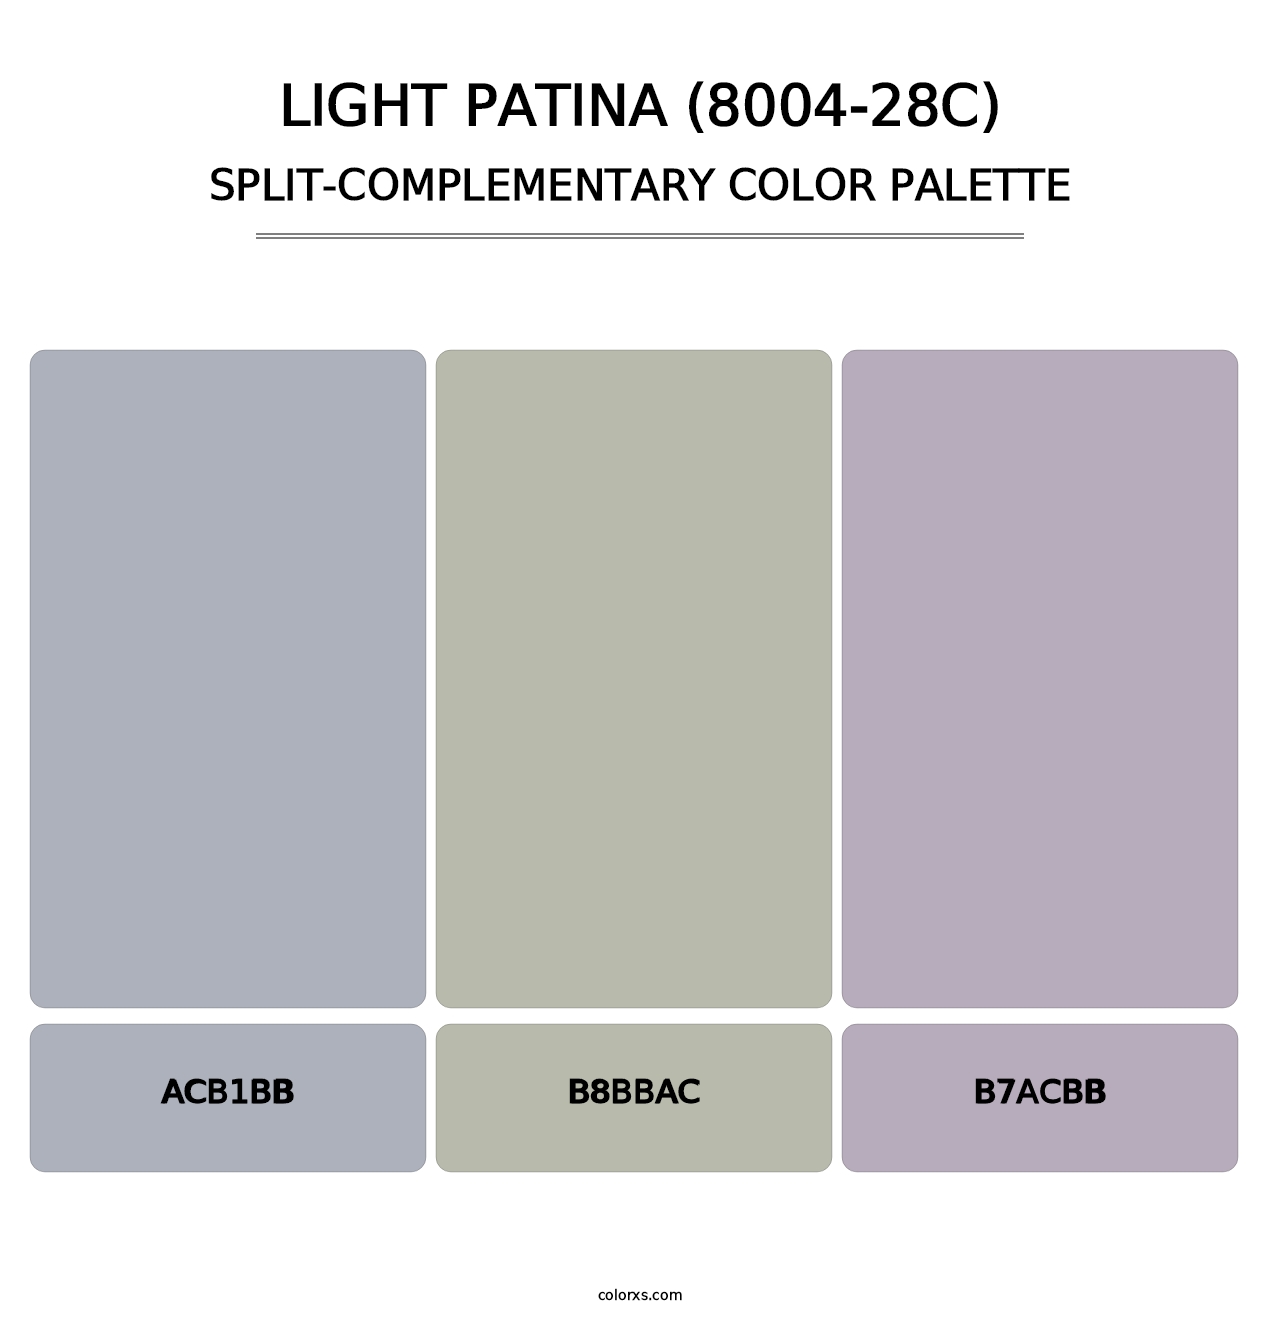 Light Patina (8004-28C) - Split-Complementary Color Palette